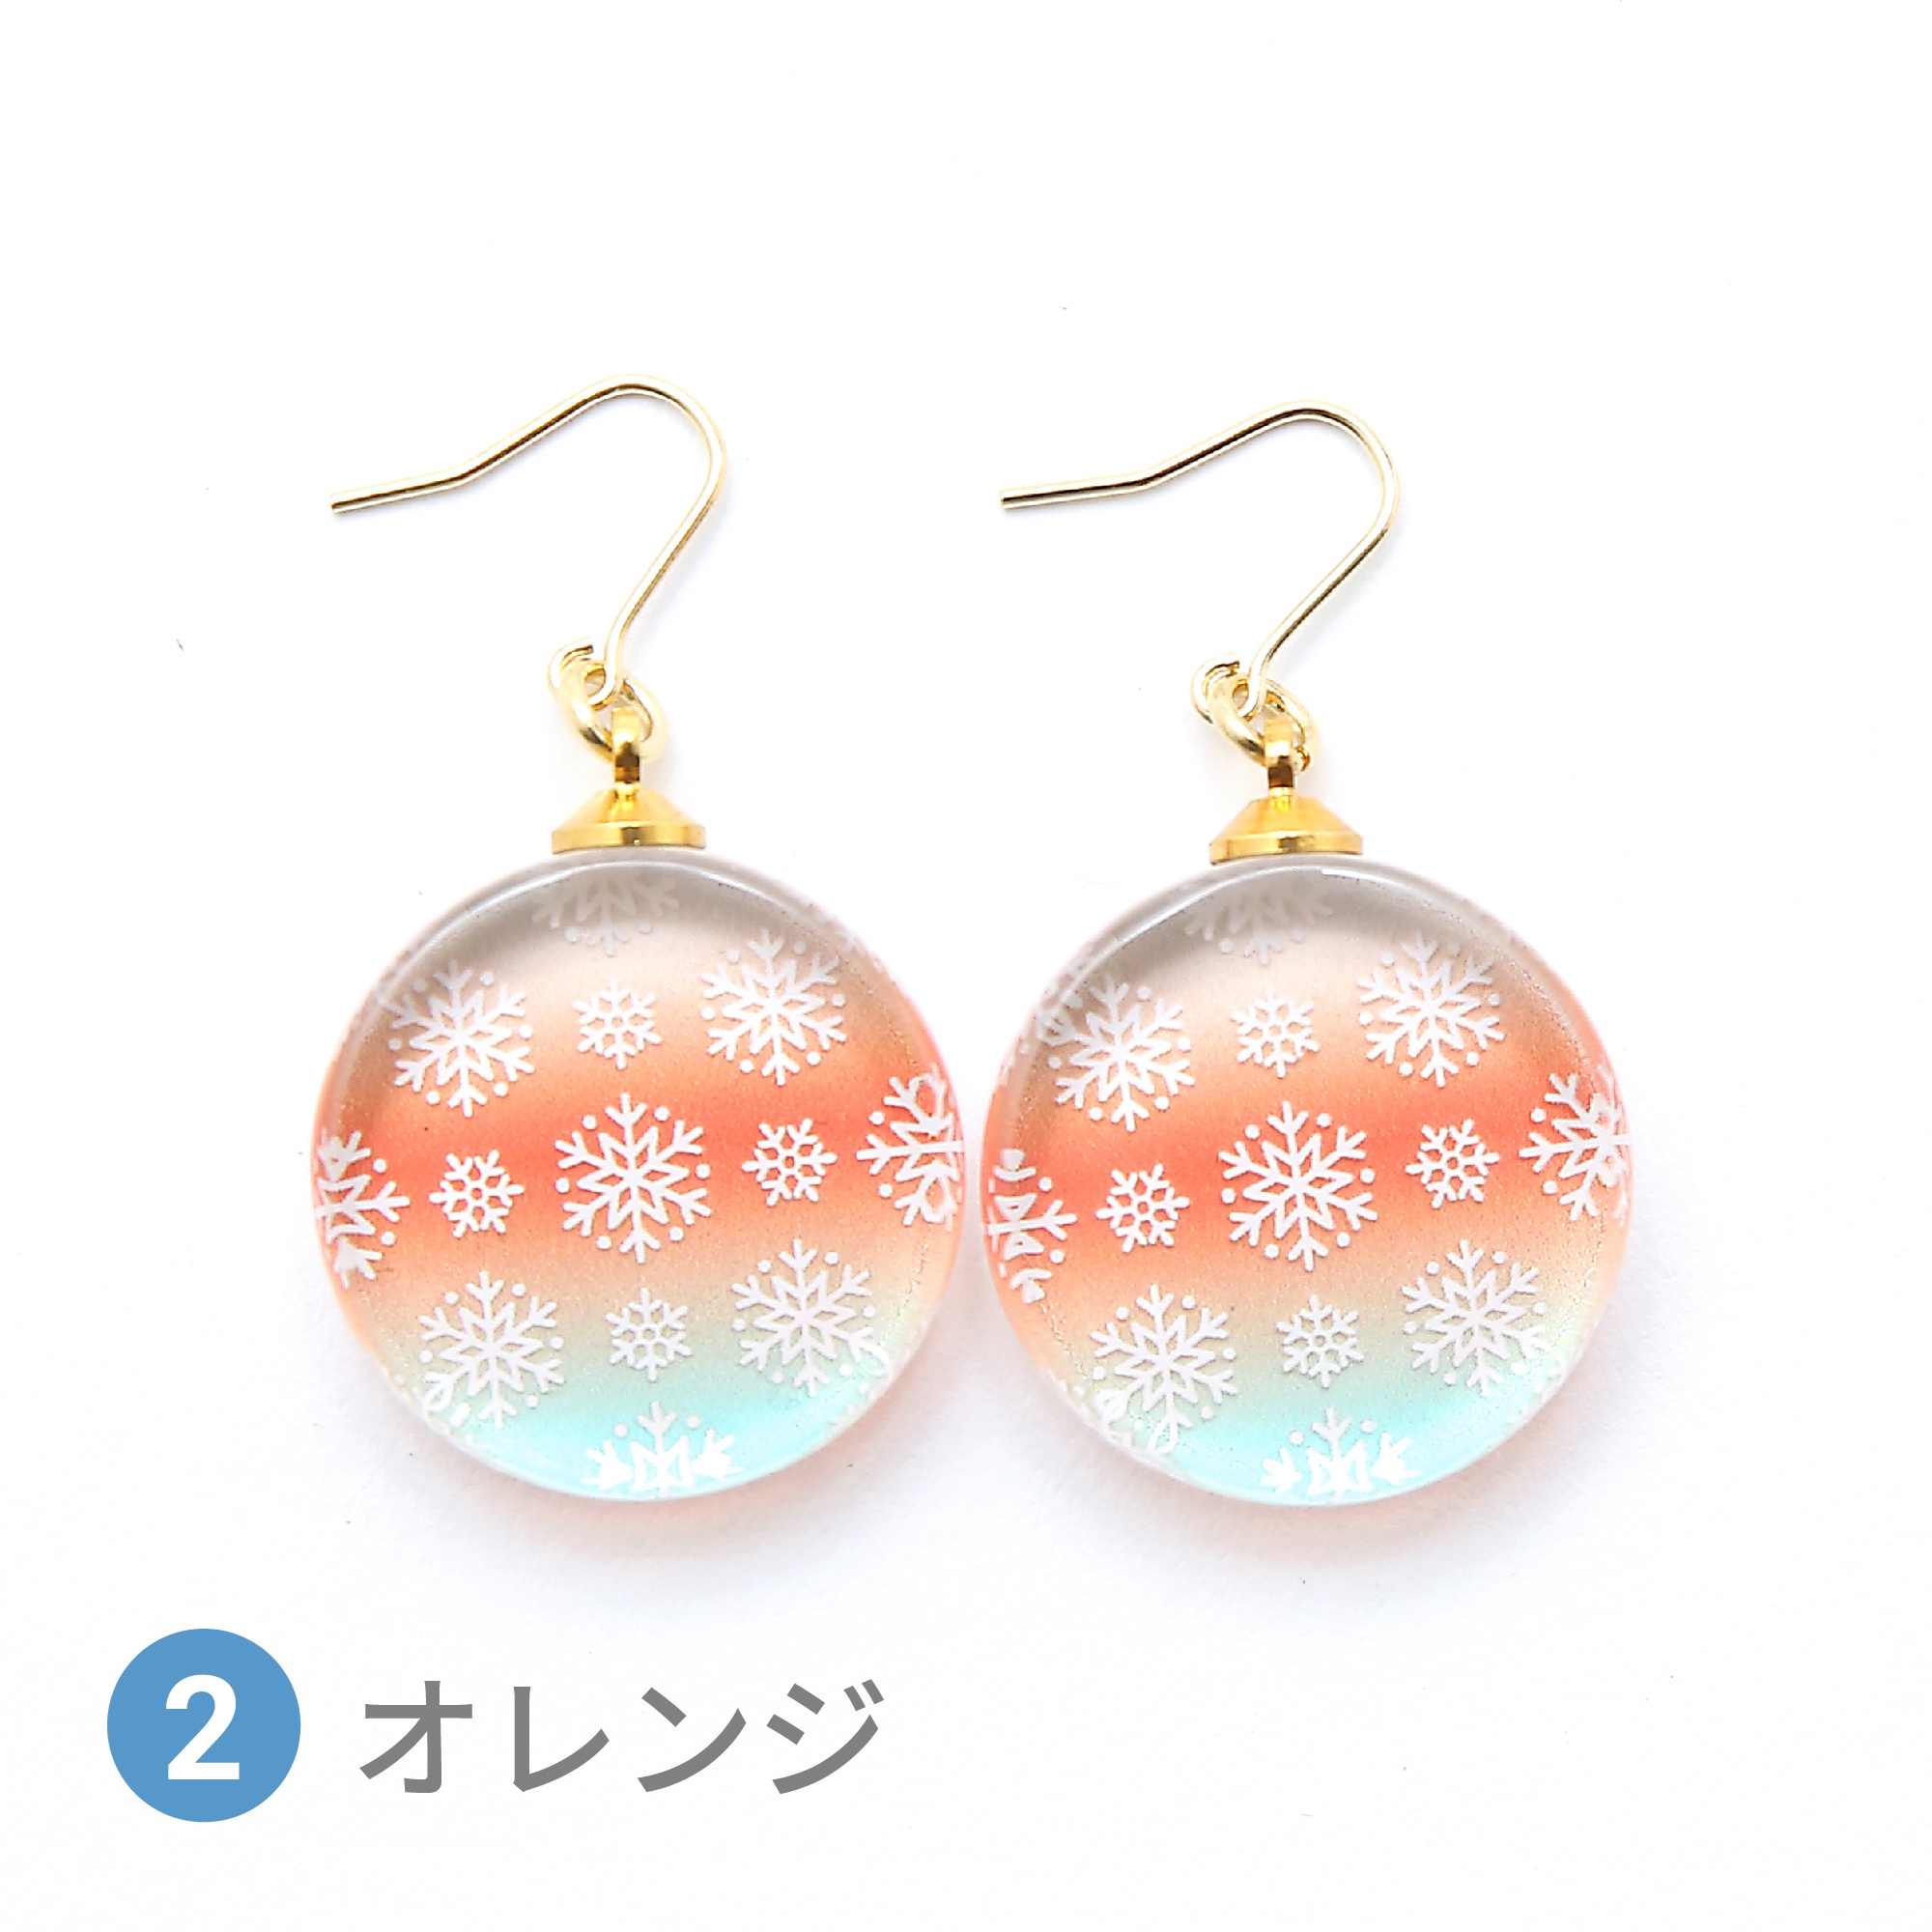 Glass accessories Pierced Earring snow flake orange round shape